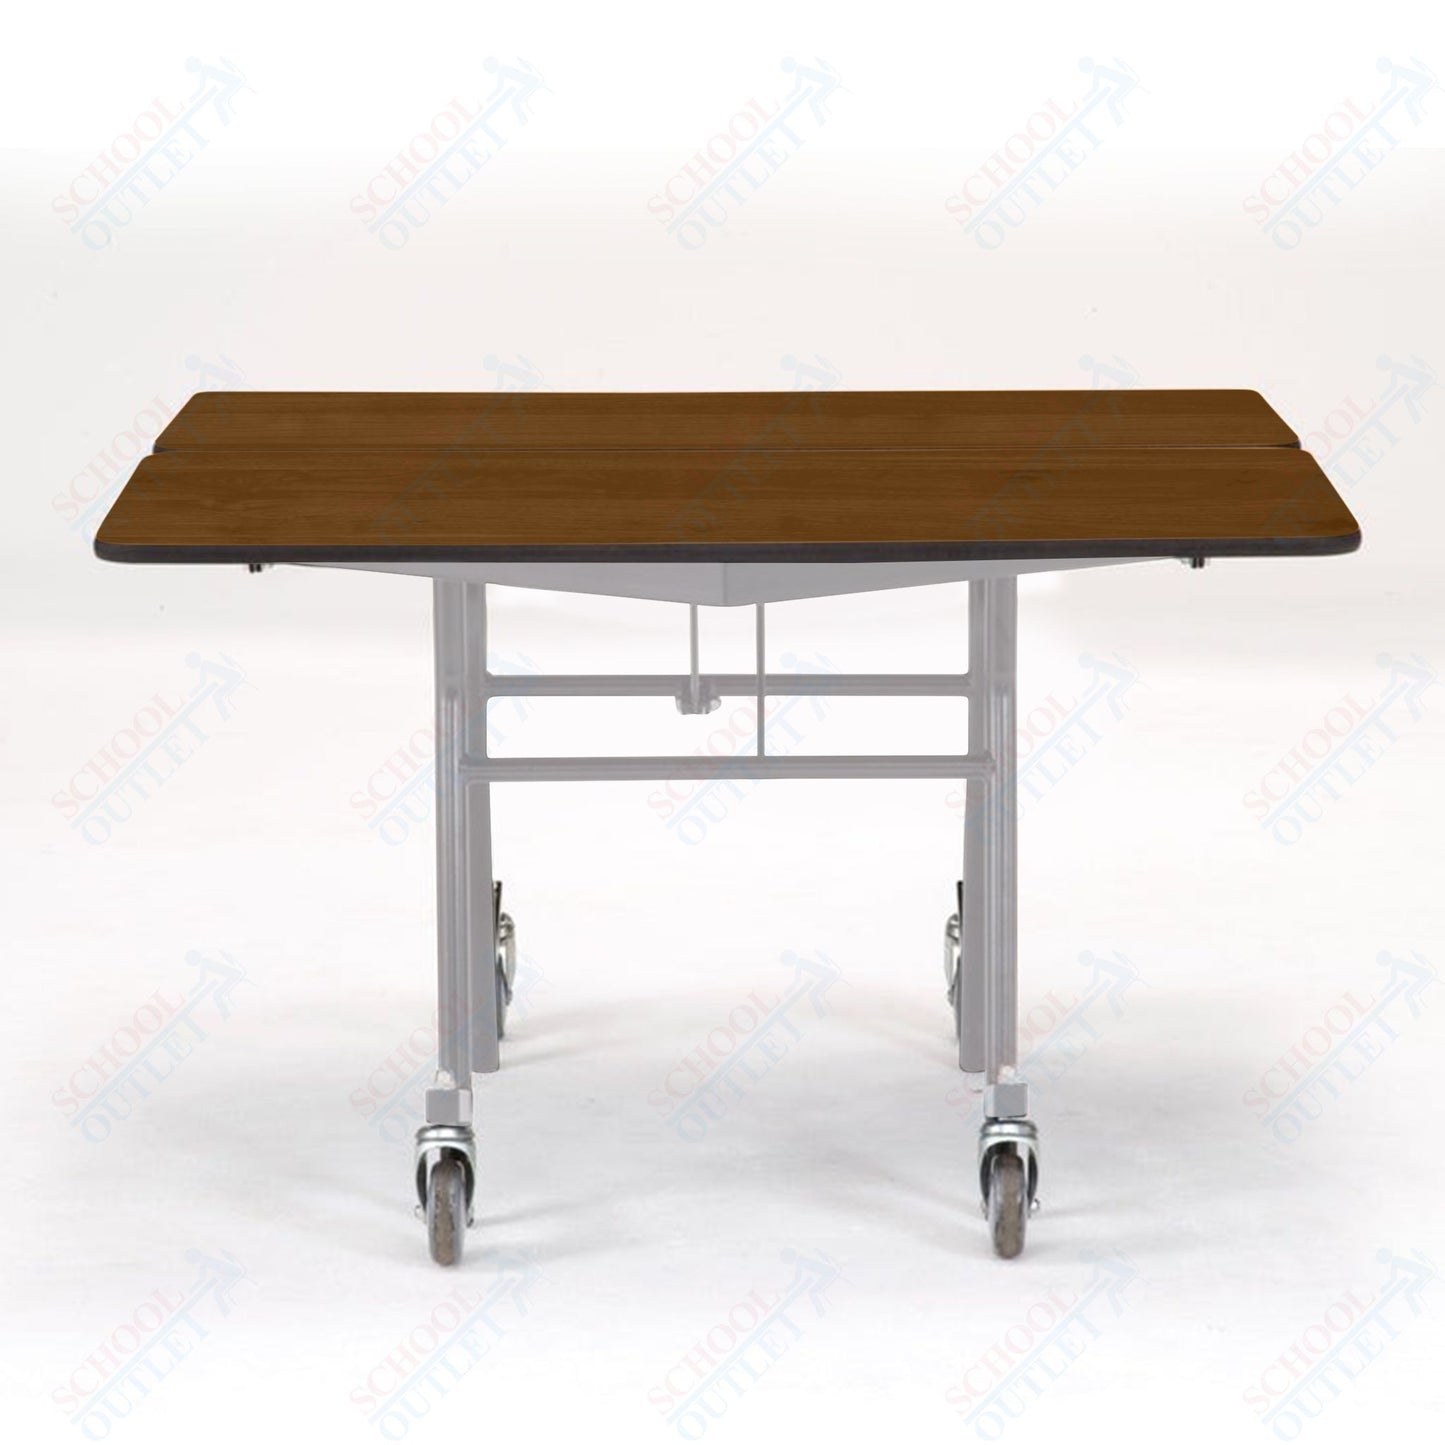 NPS Mobile Cafeteria Square Table Shape Unit - 60" W x 60" L (National Public Seating NPS-MT60Q)